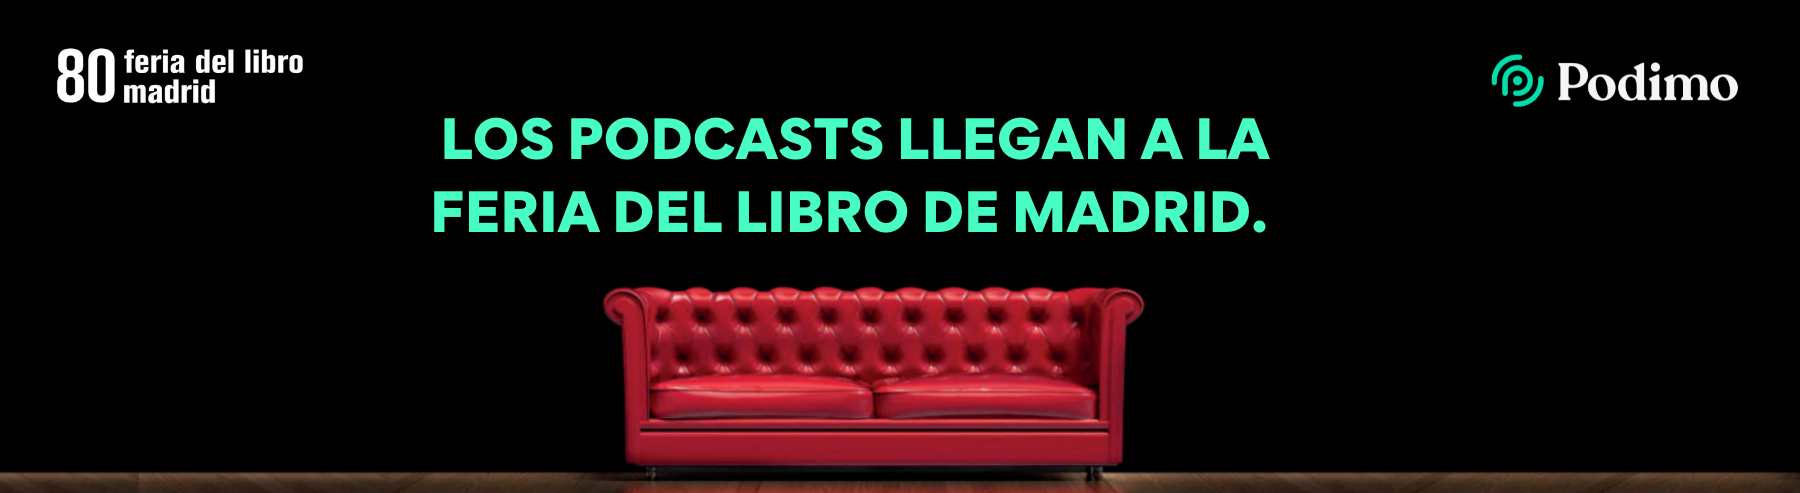 Los podcasts llegan a la Feria del libro de Madrid